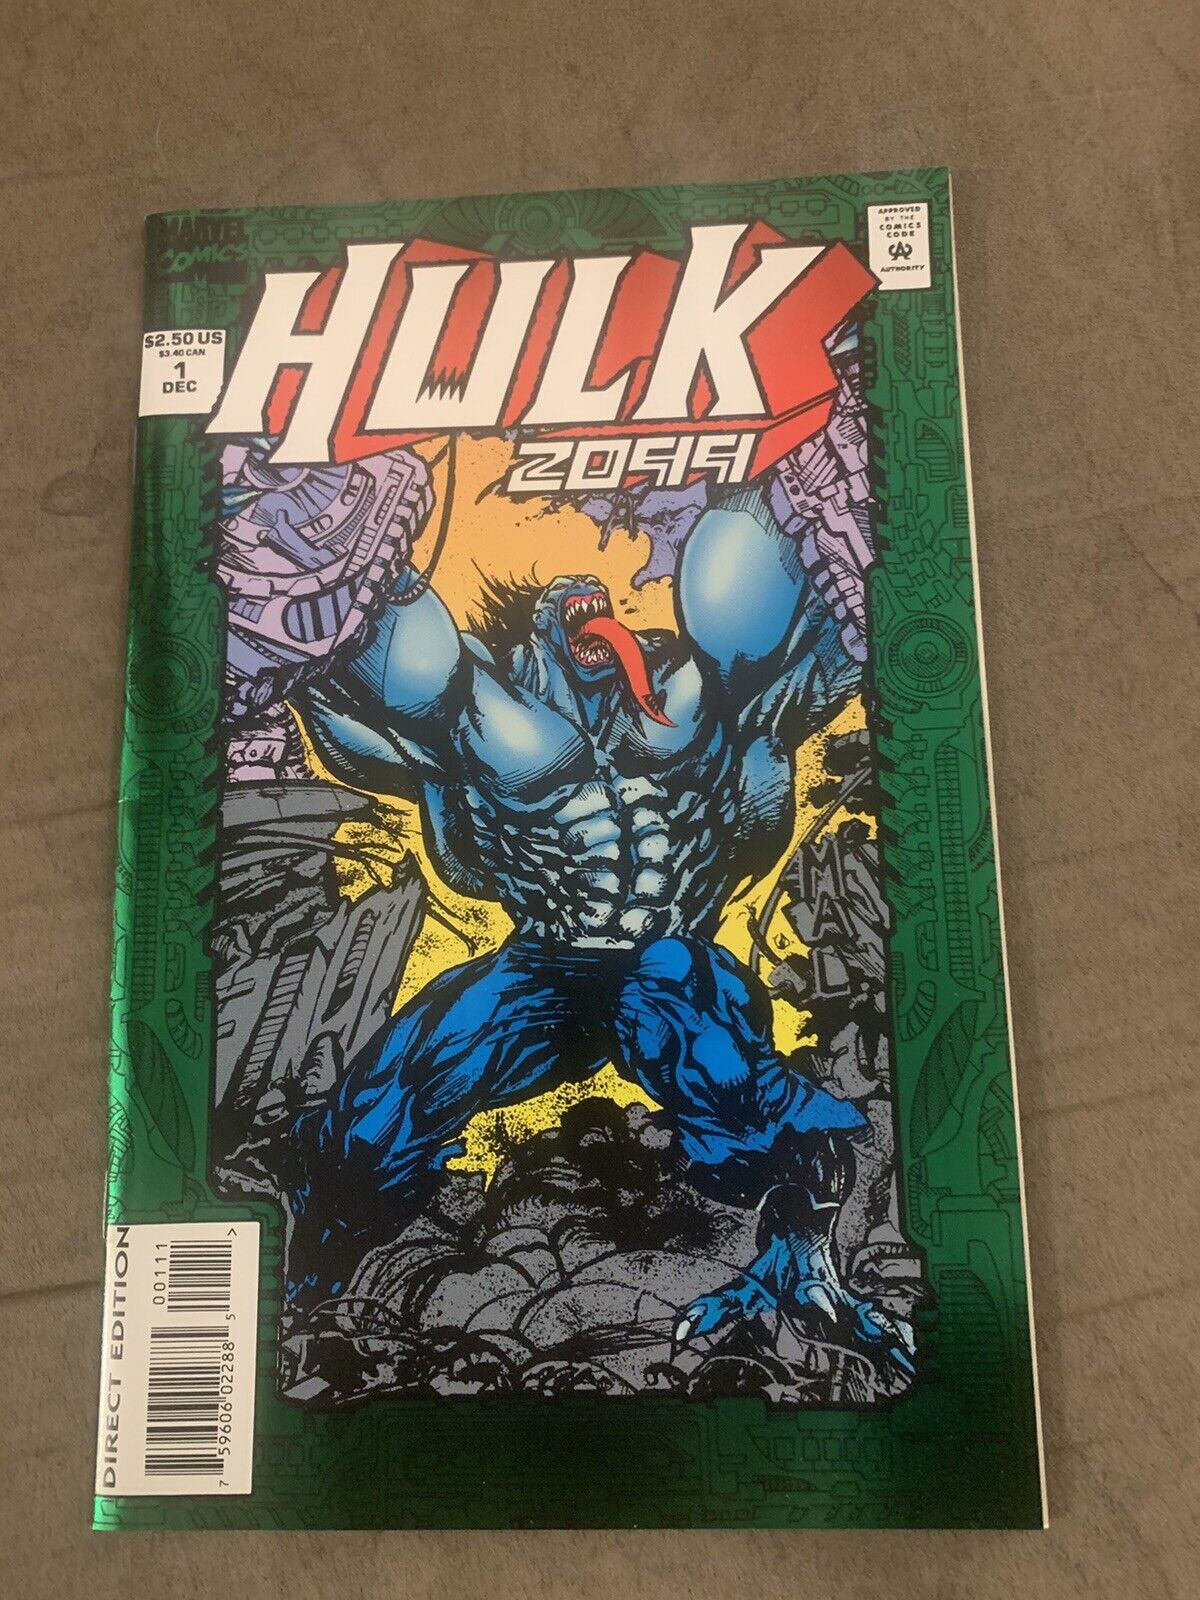 Hulk 2099 #1 CGC 9.8 1994 Green Foil Cover